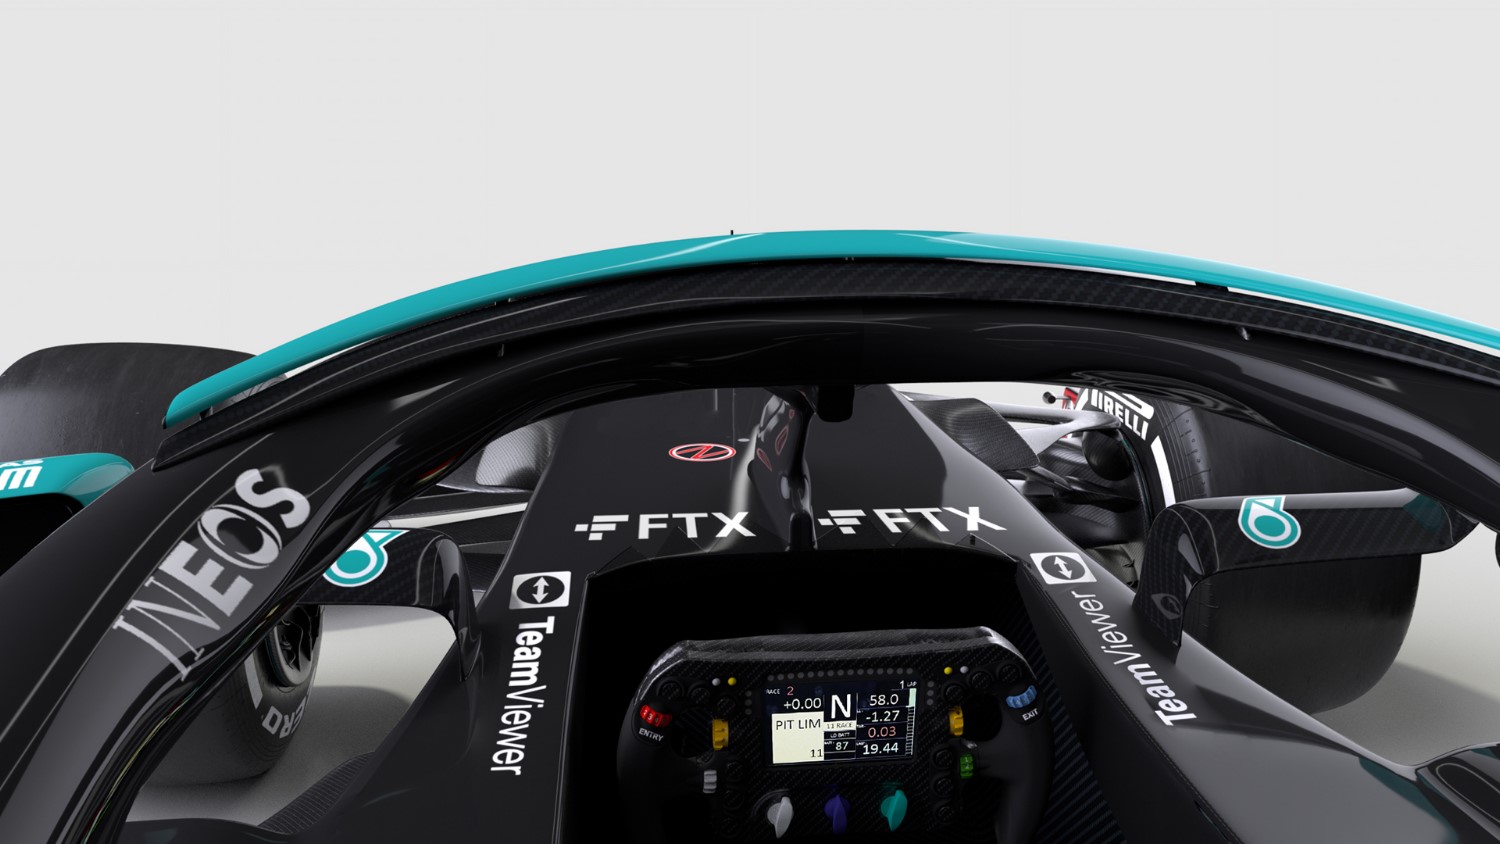 FTX logos on the Mercedes F1 car